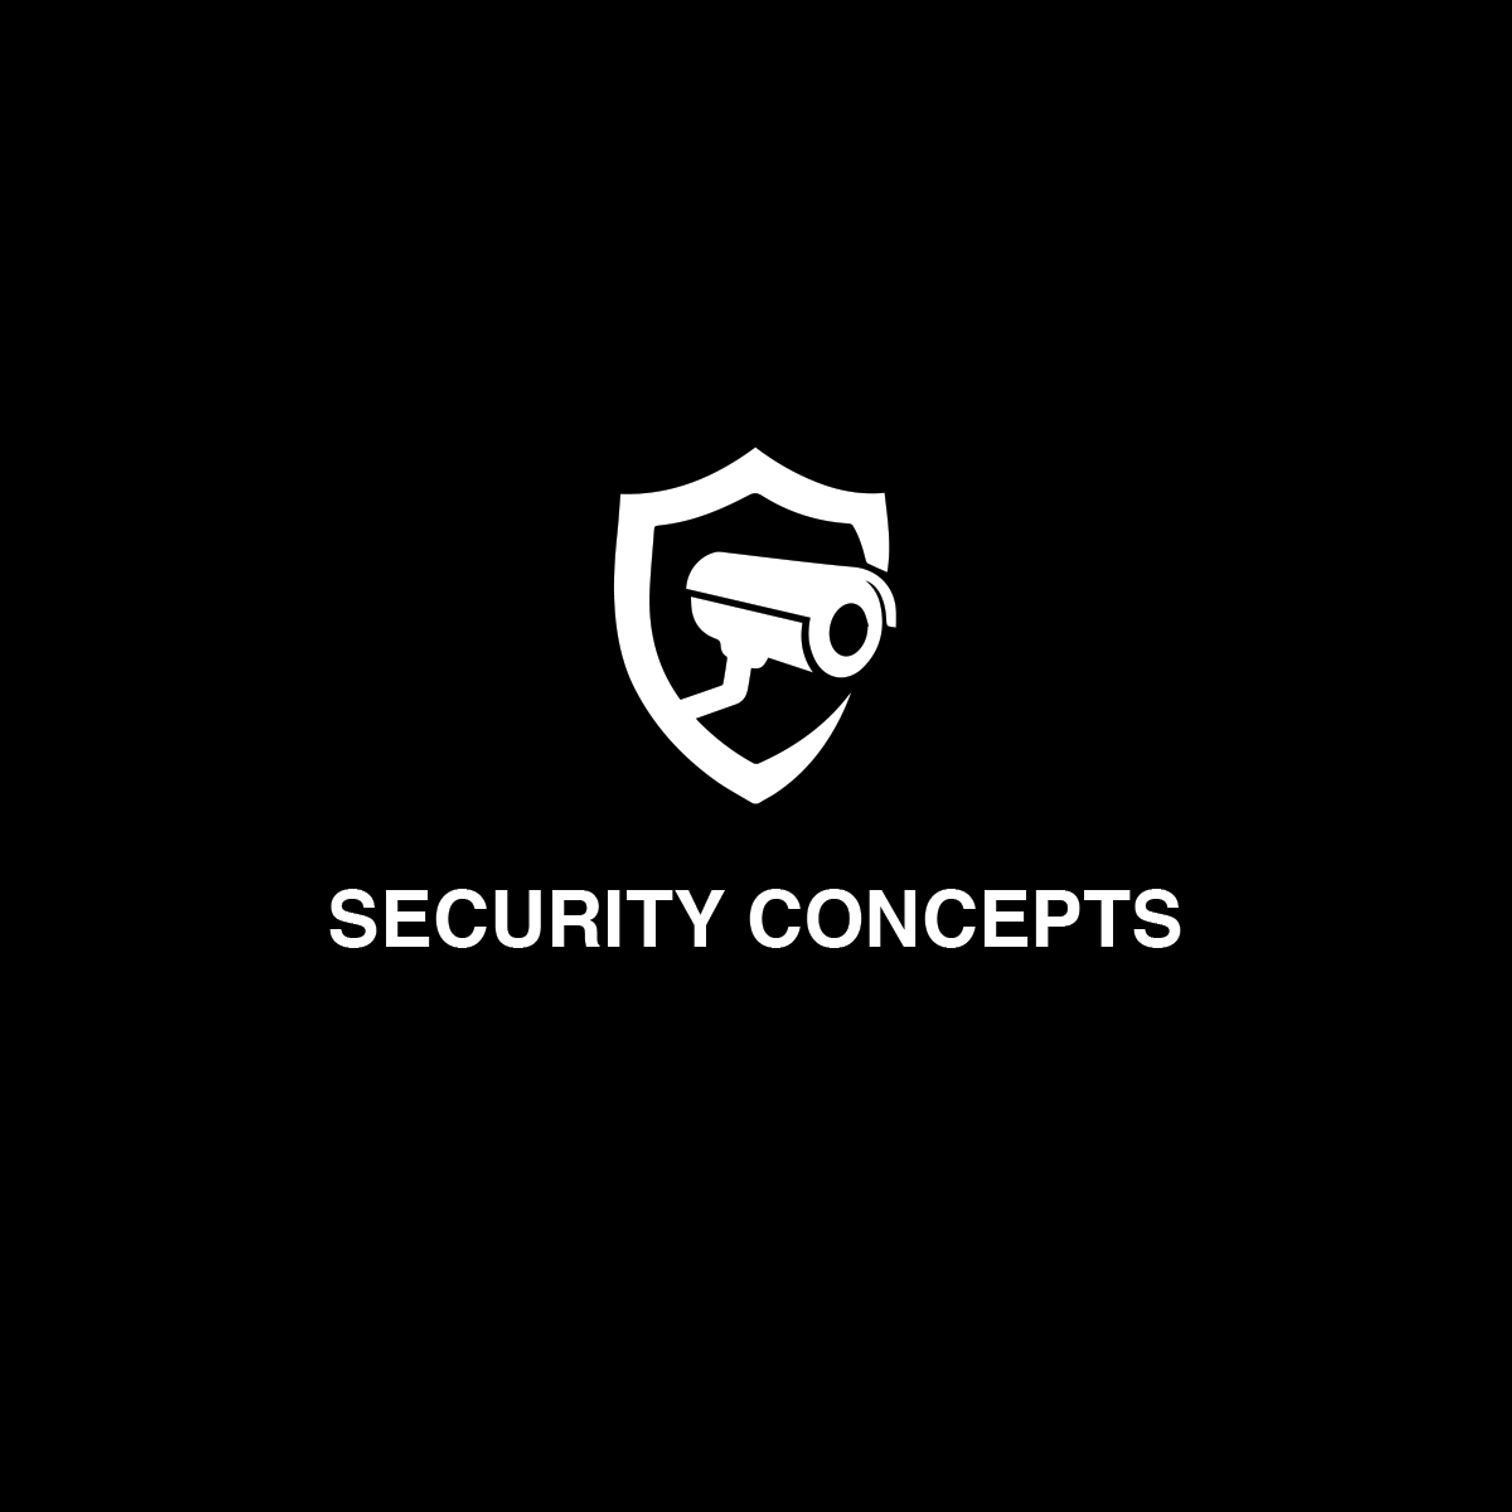 Security Concepts logo